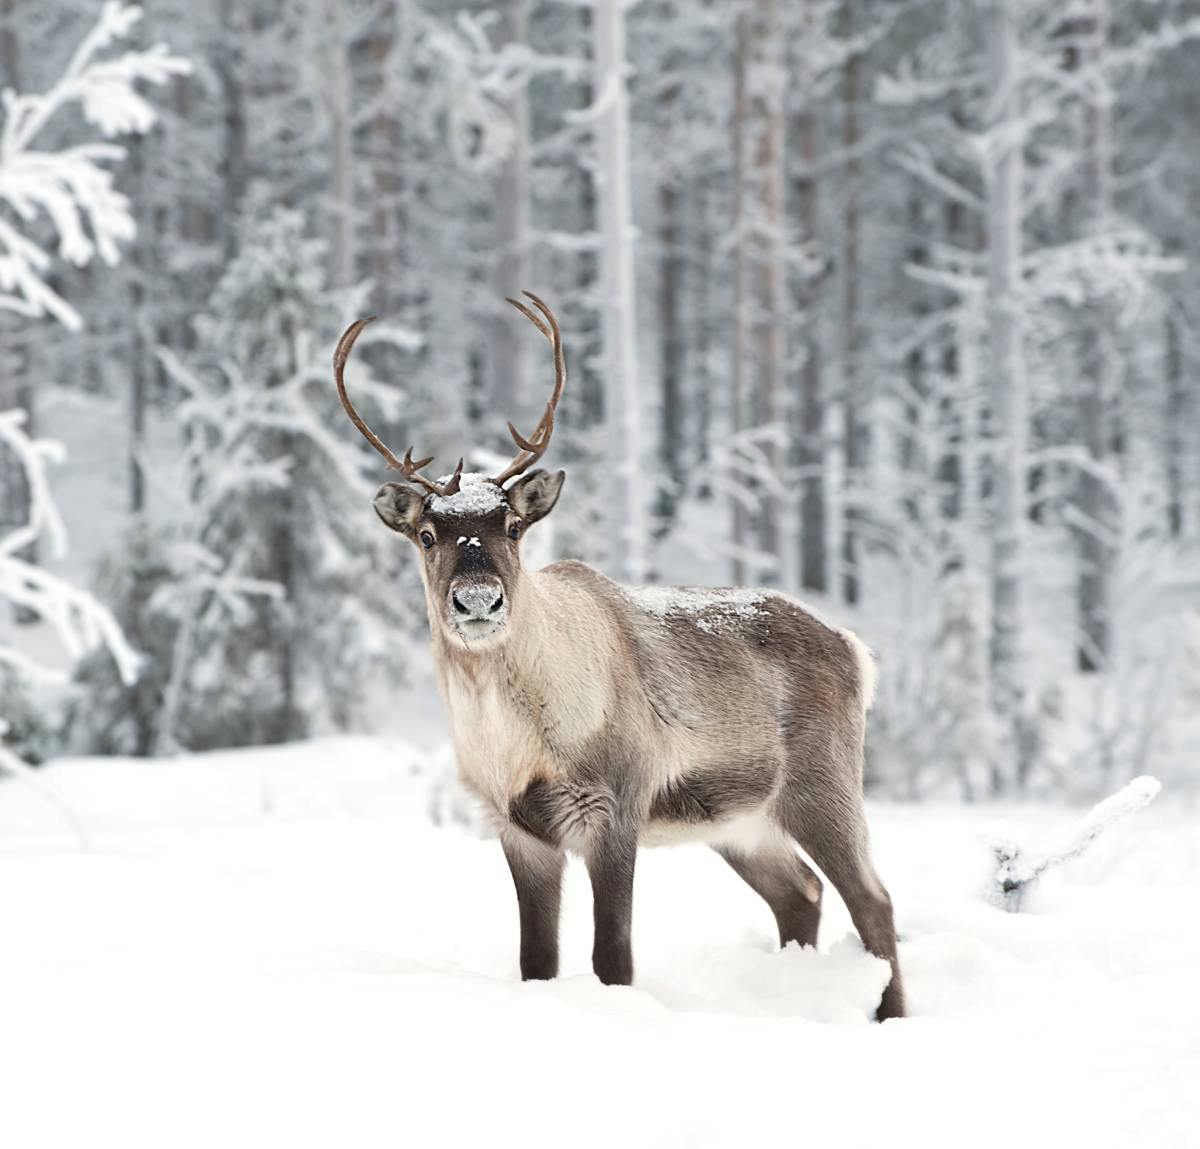 Reindeer: large, majestic herbivores surviving the Arctic Tundra